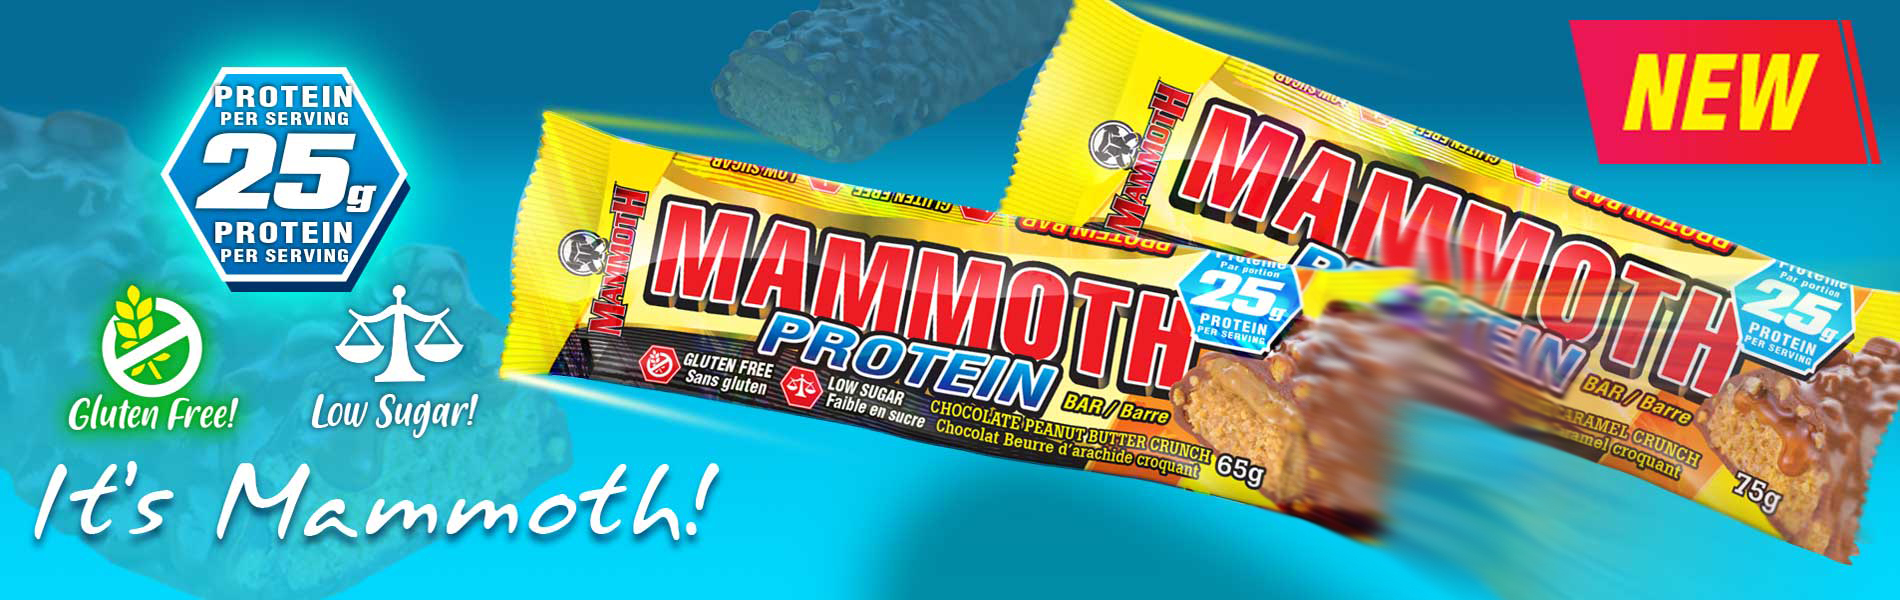 Mammoth Protein Bar